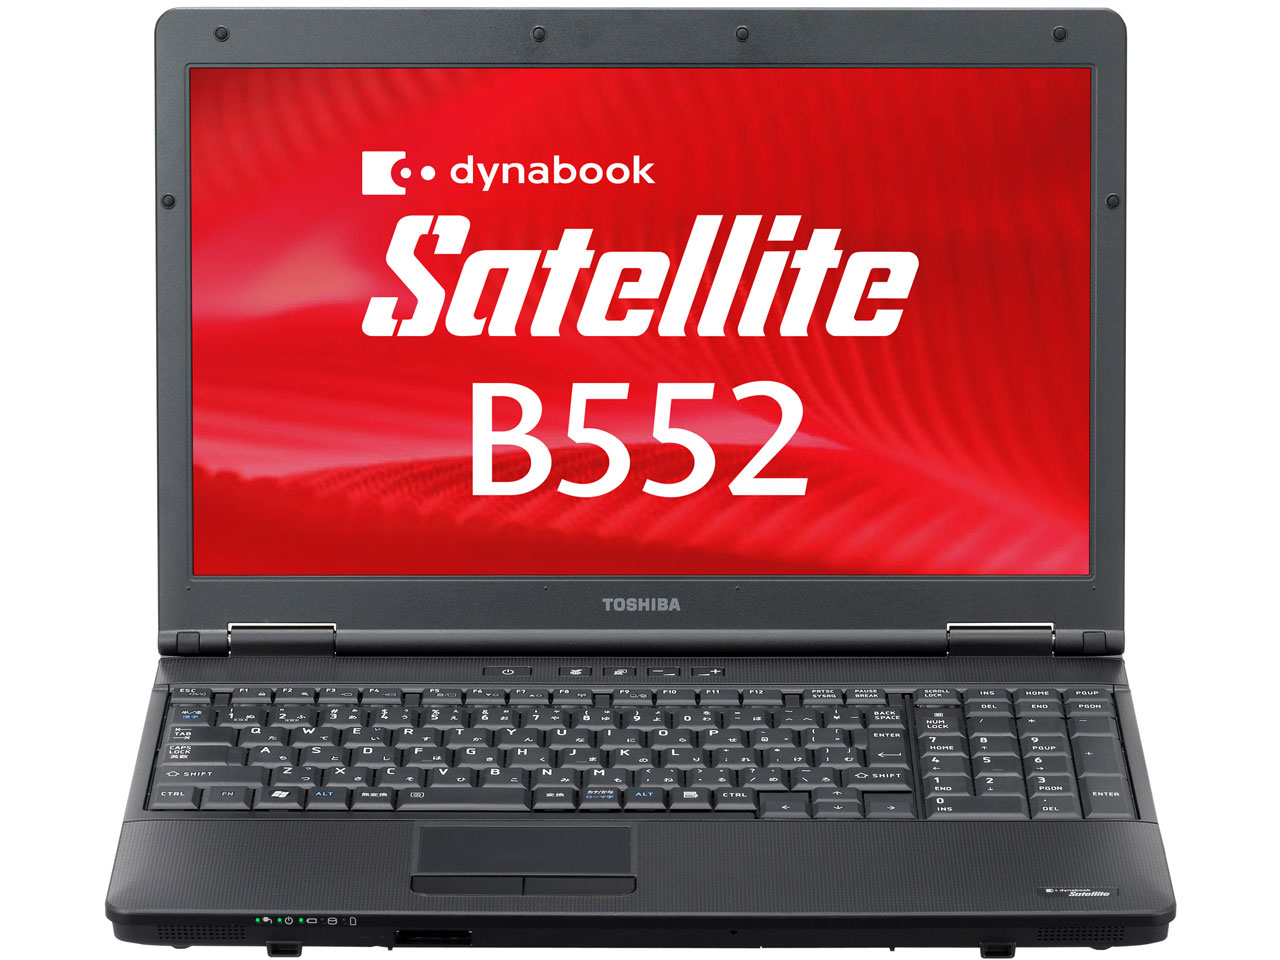 価格.com - dynabook Satellite B552 B552/F PB552FFBP25A51 の製品画像